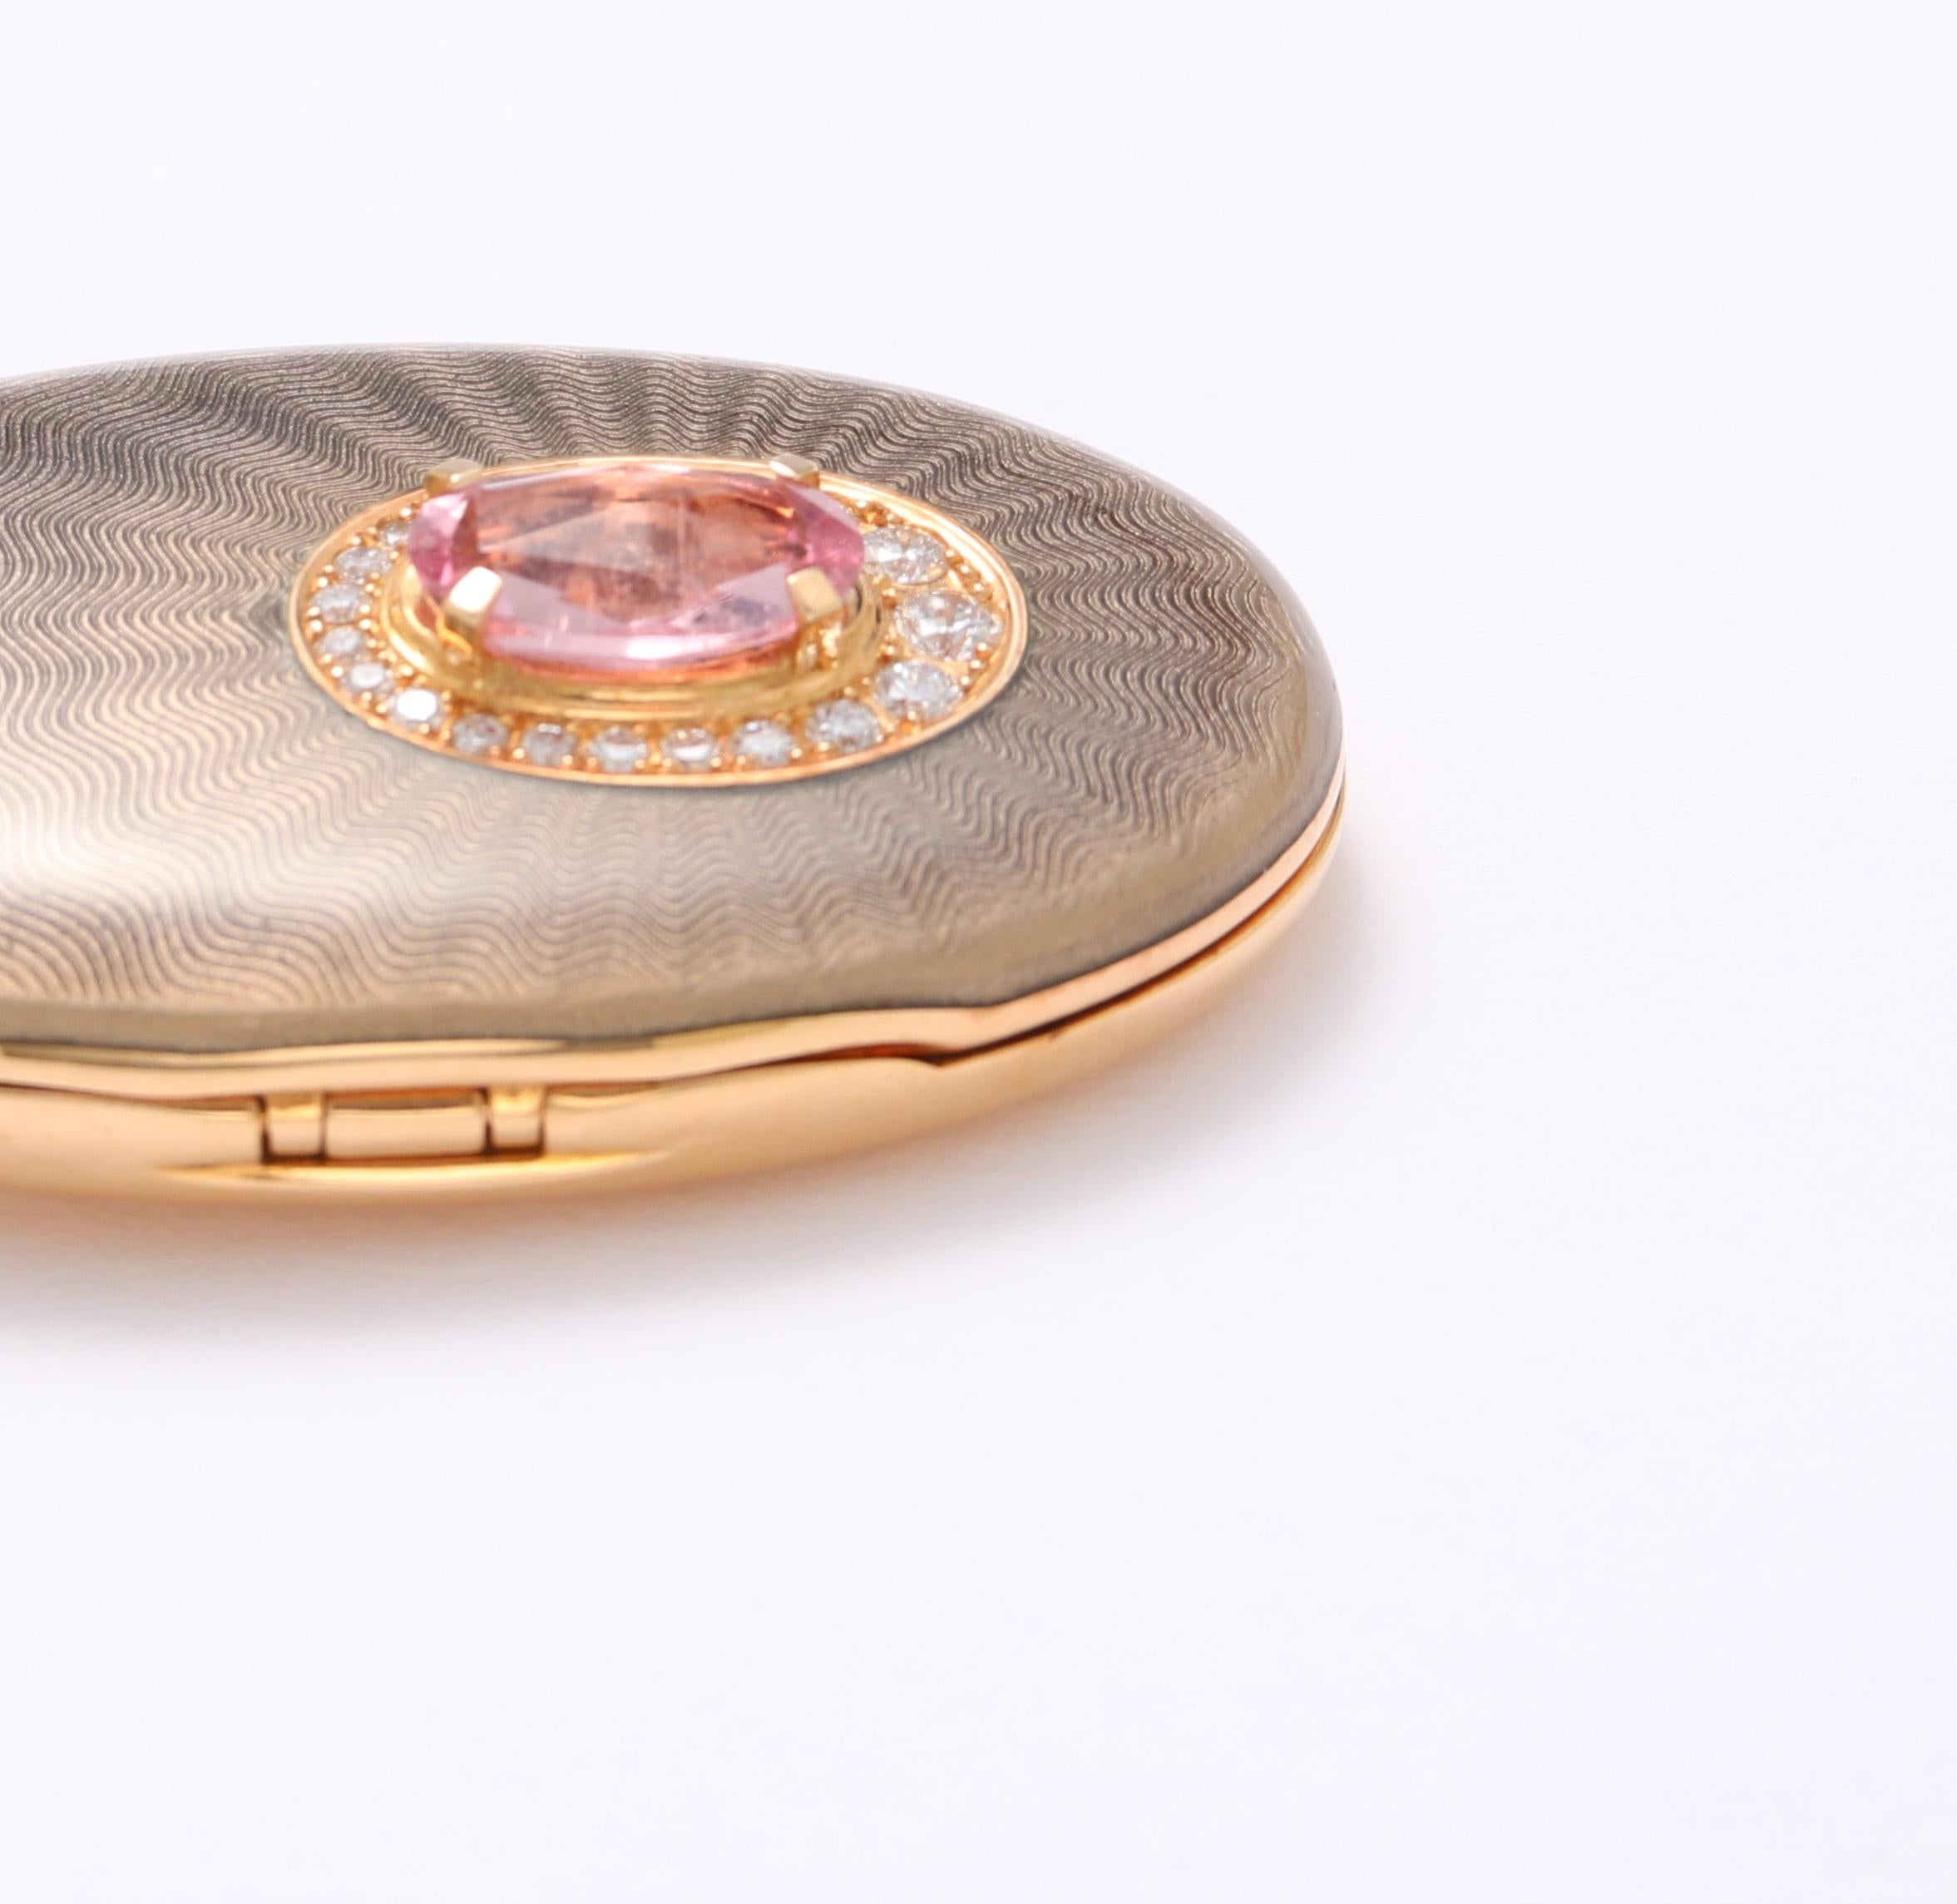 Oval Locket Pendant 18k Rose Gold Grey/Pink Enamel 26 Diamonds 1 Pink Tourmaline For Sale 4